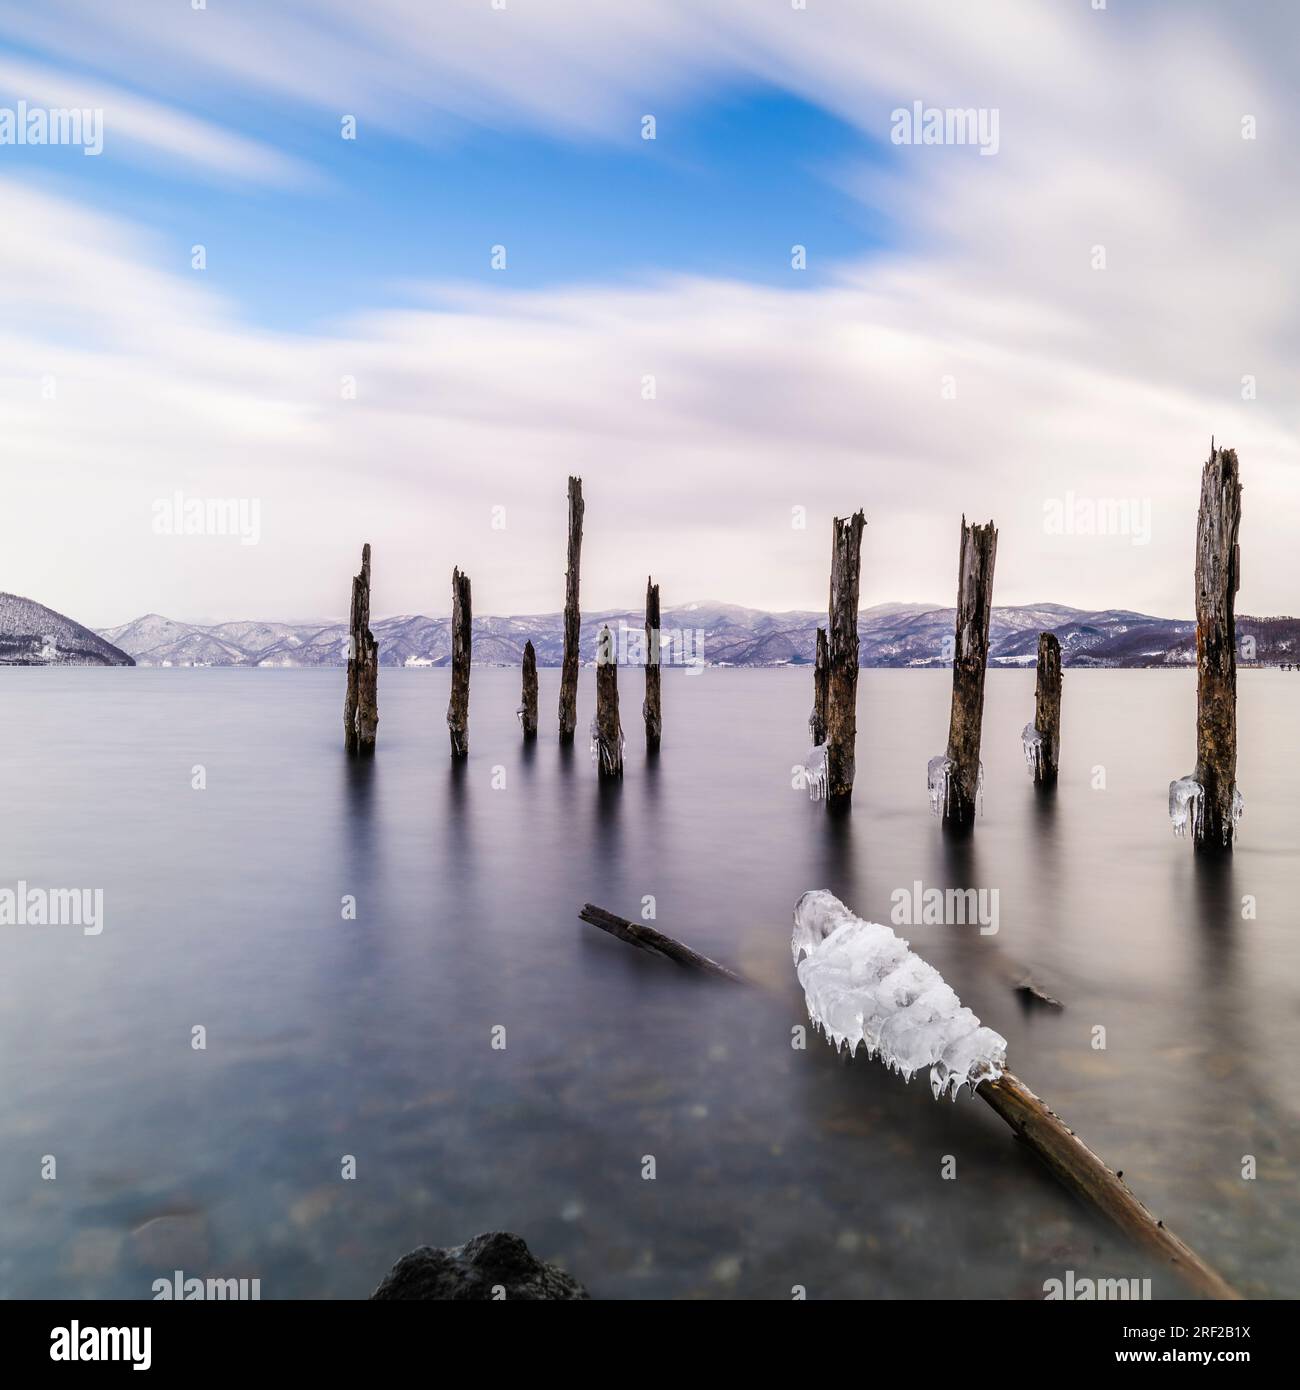 Long exposure shot of wooden sticks in the water at lake Toya, Hokkaido, Japan Stock Photo